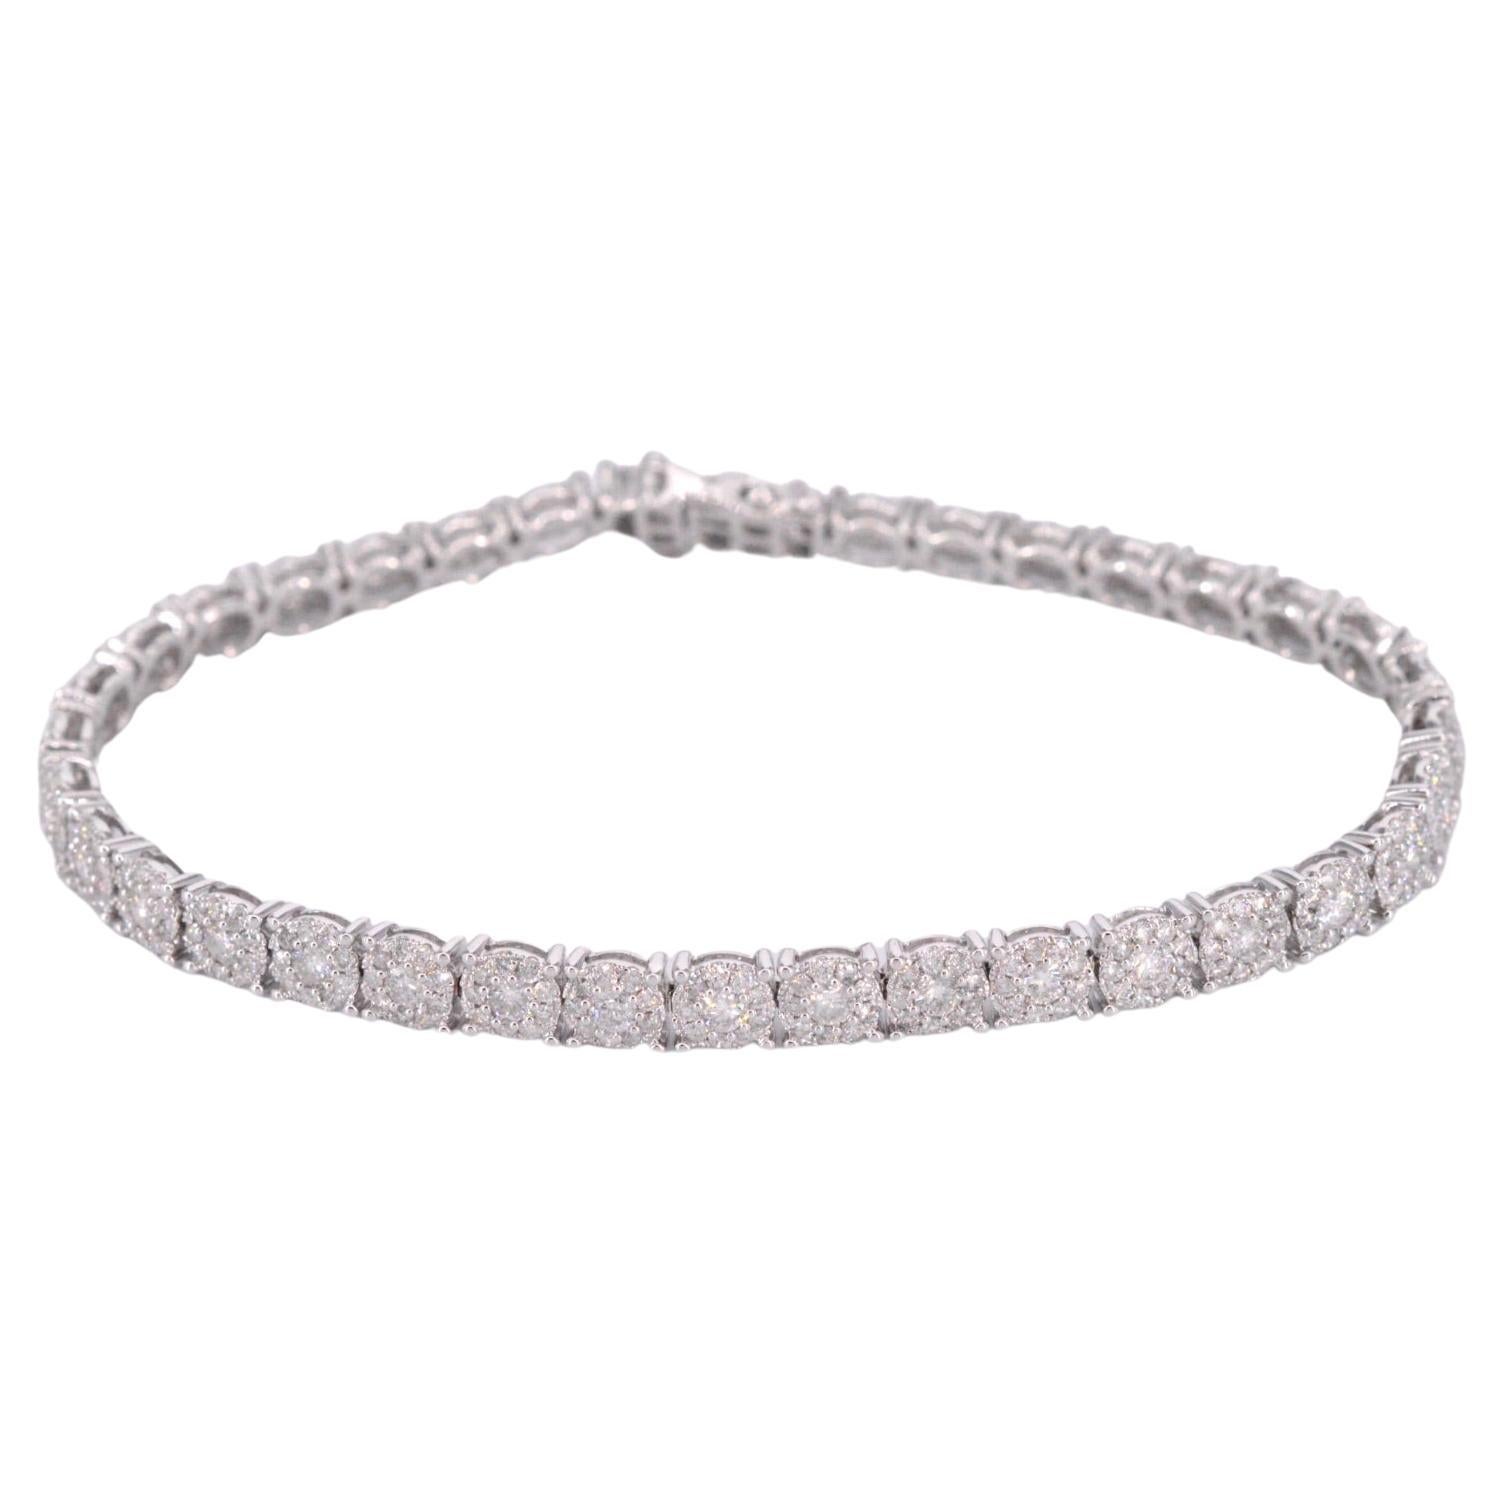 White gold tennis bracelet with diamonds 5.50 carat